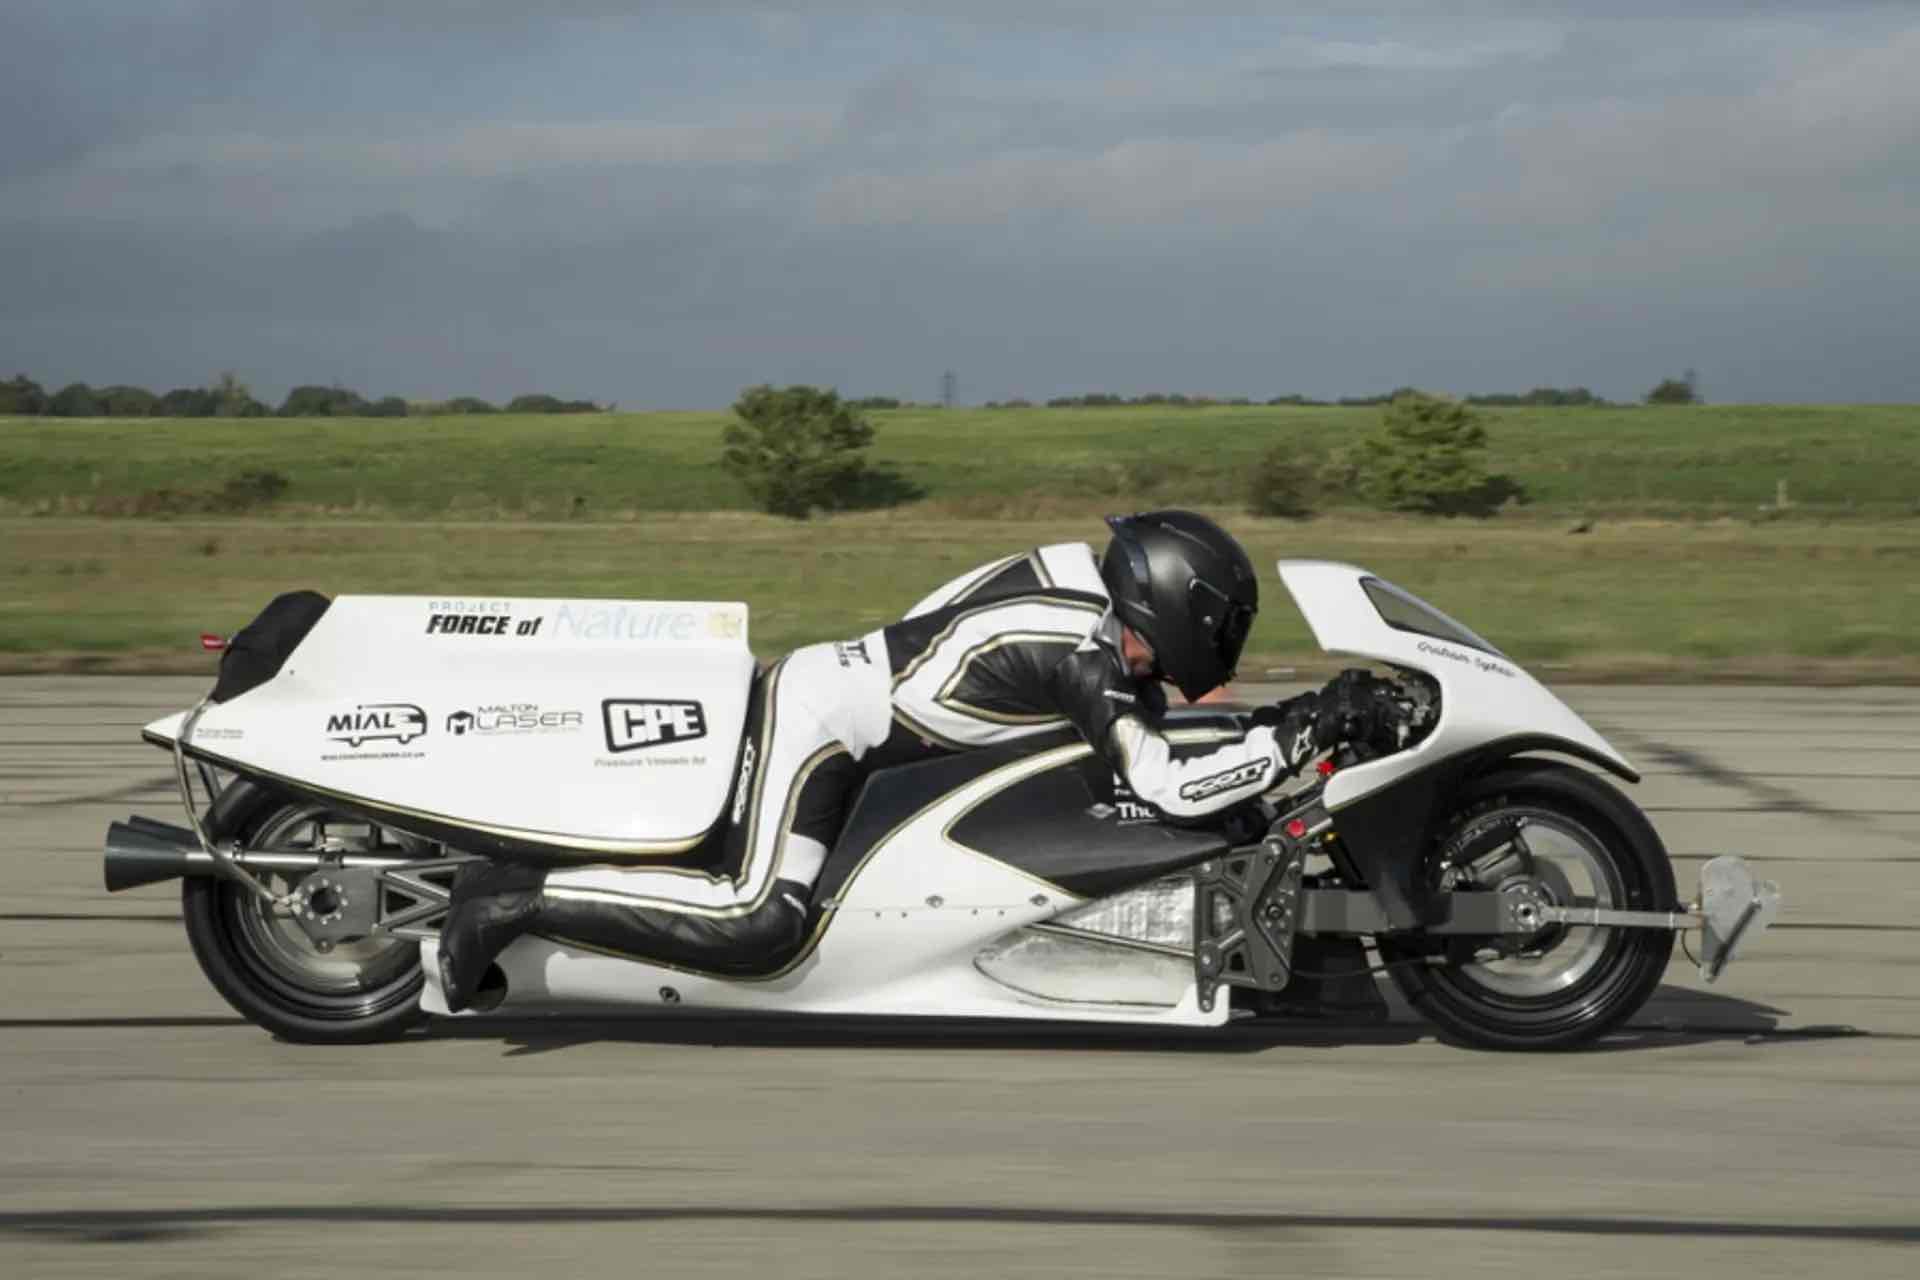 Moto elétrica quebra recorde mundial de arrancada - Lubes em Foco